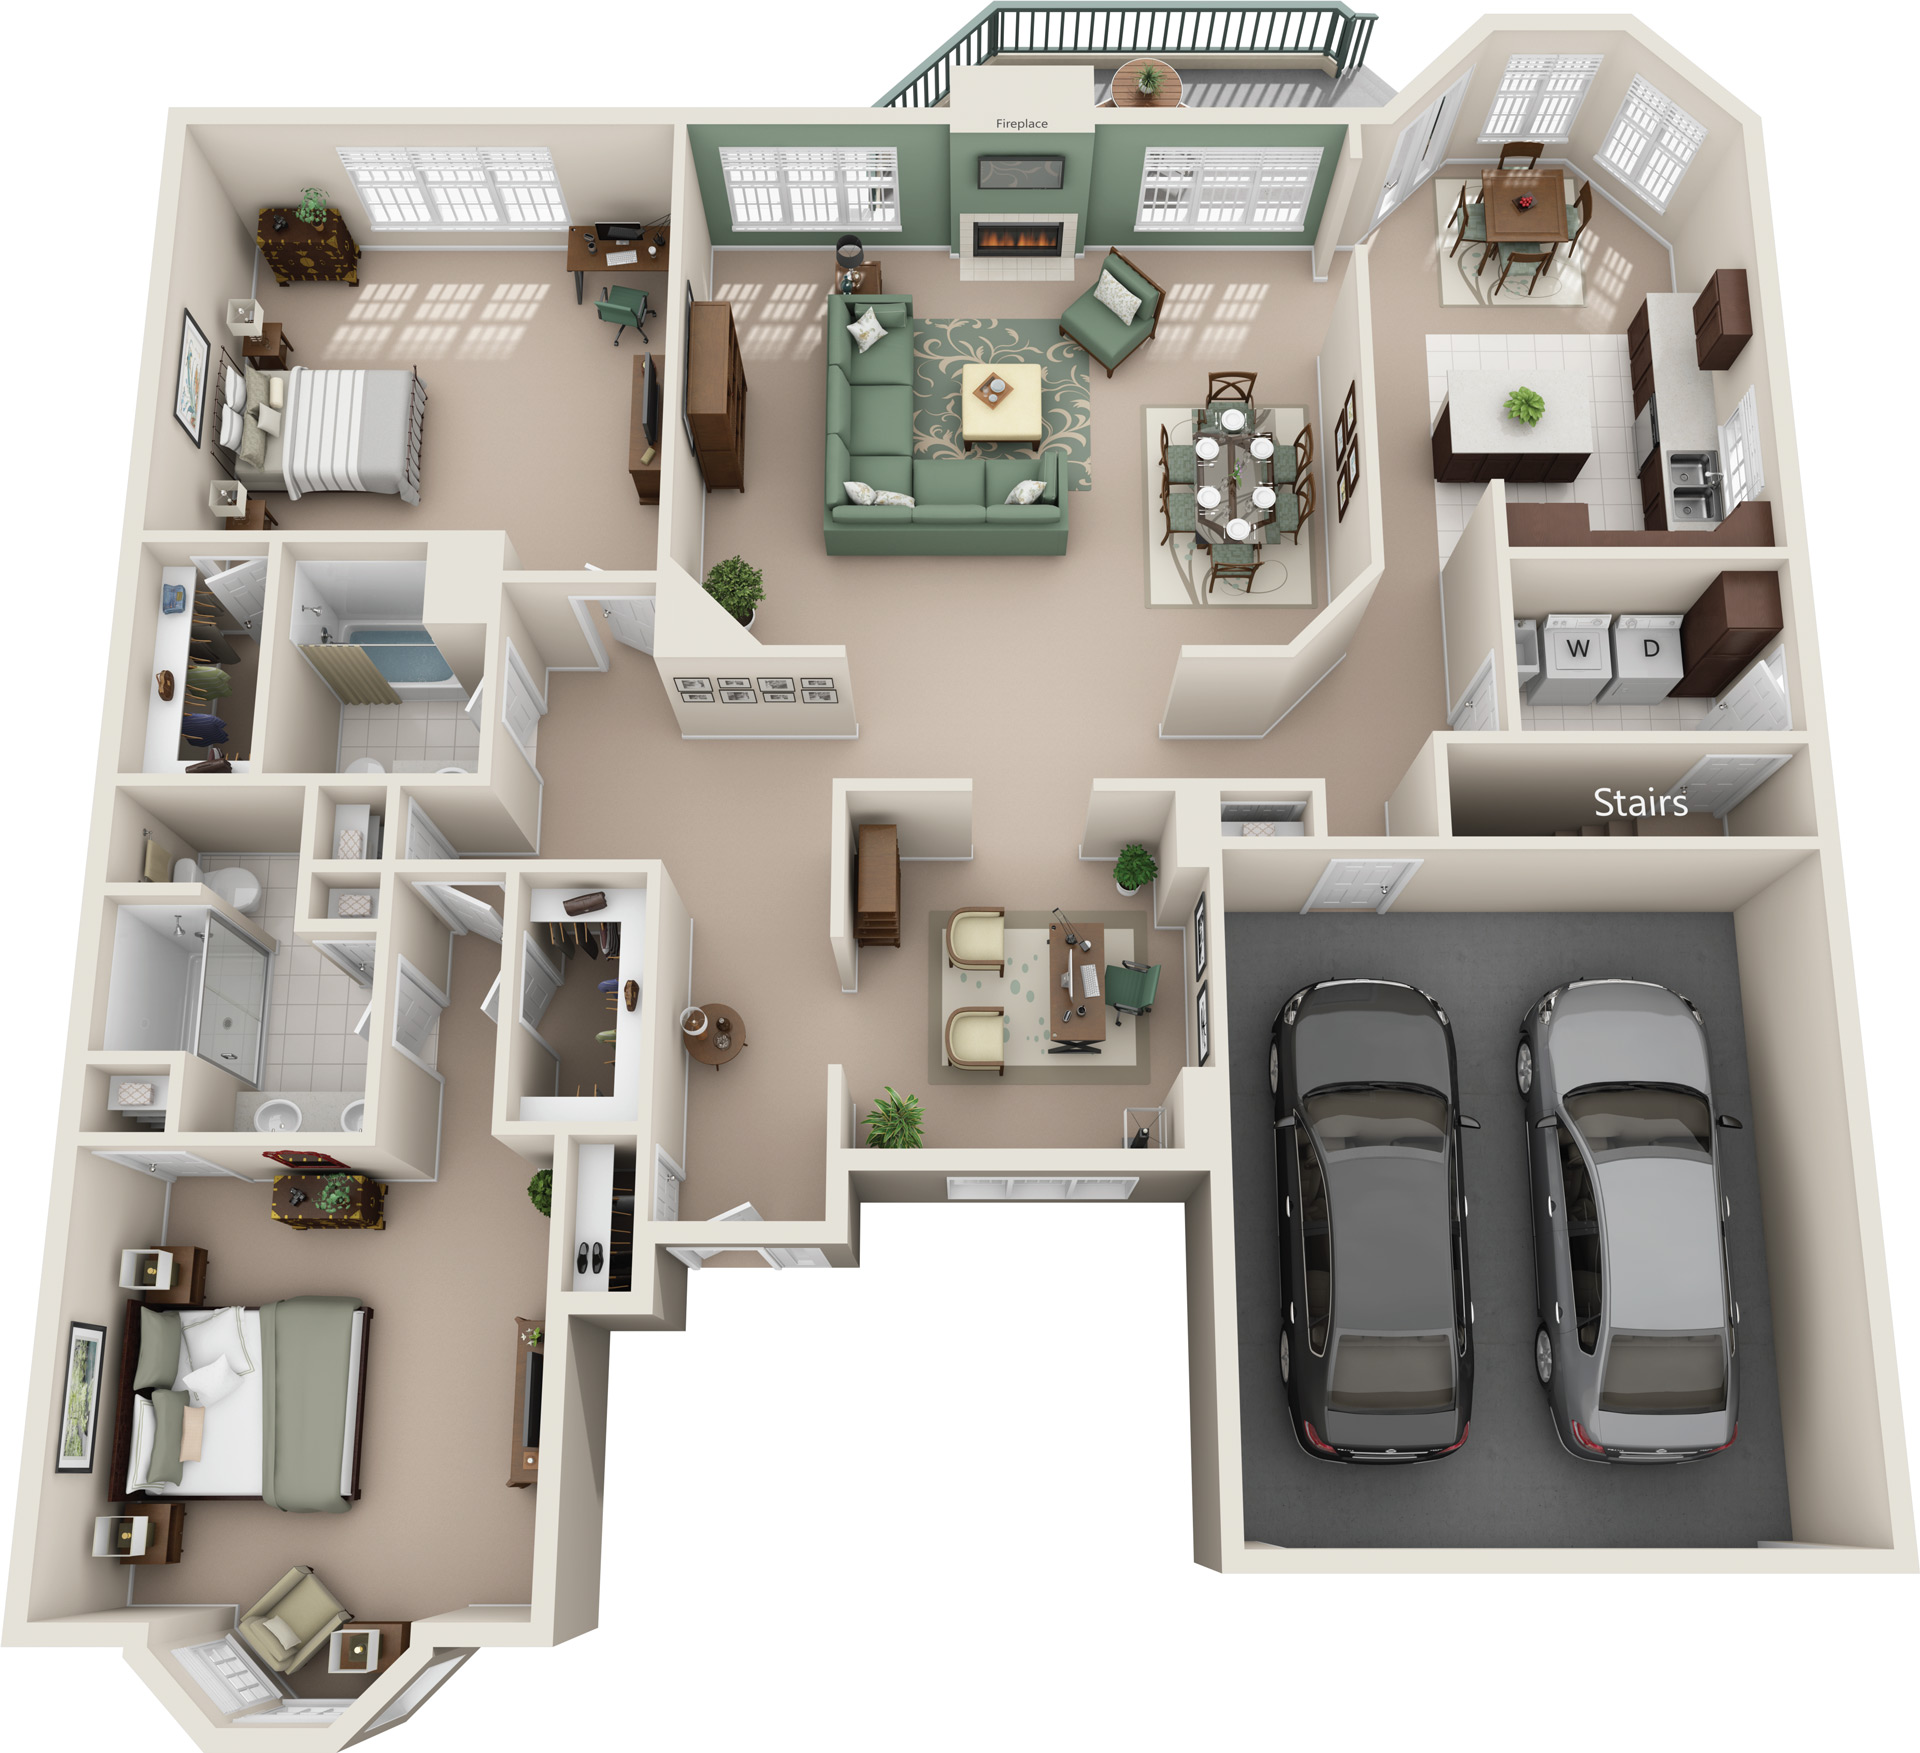 Wyndemere senior living townhome floor plan